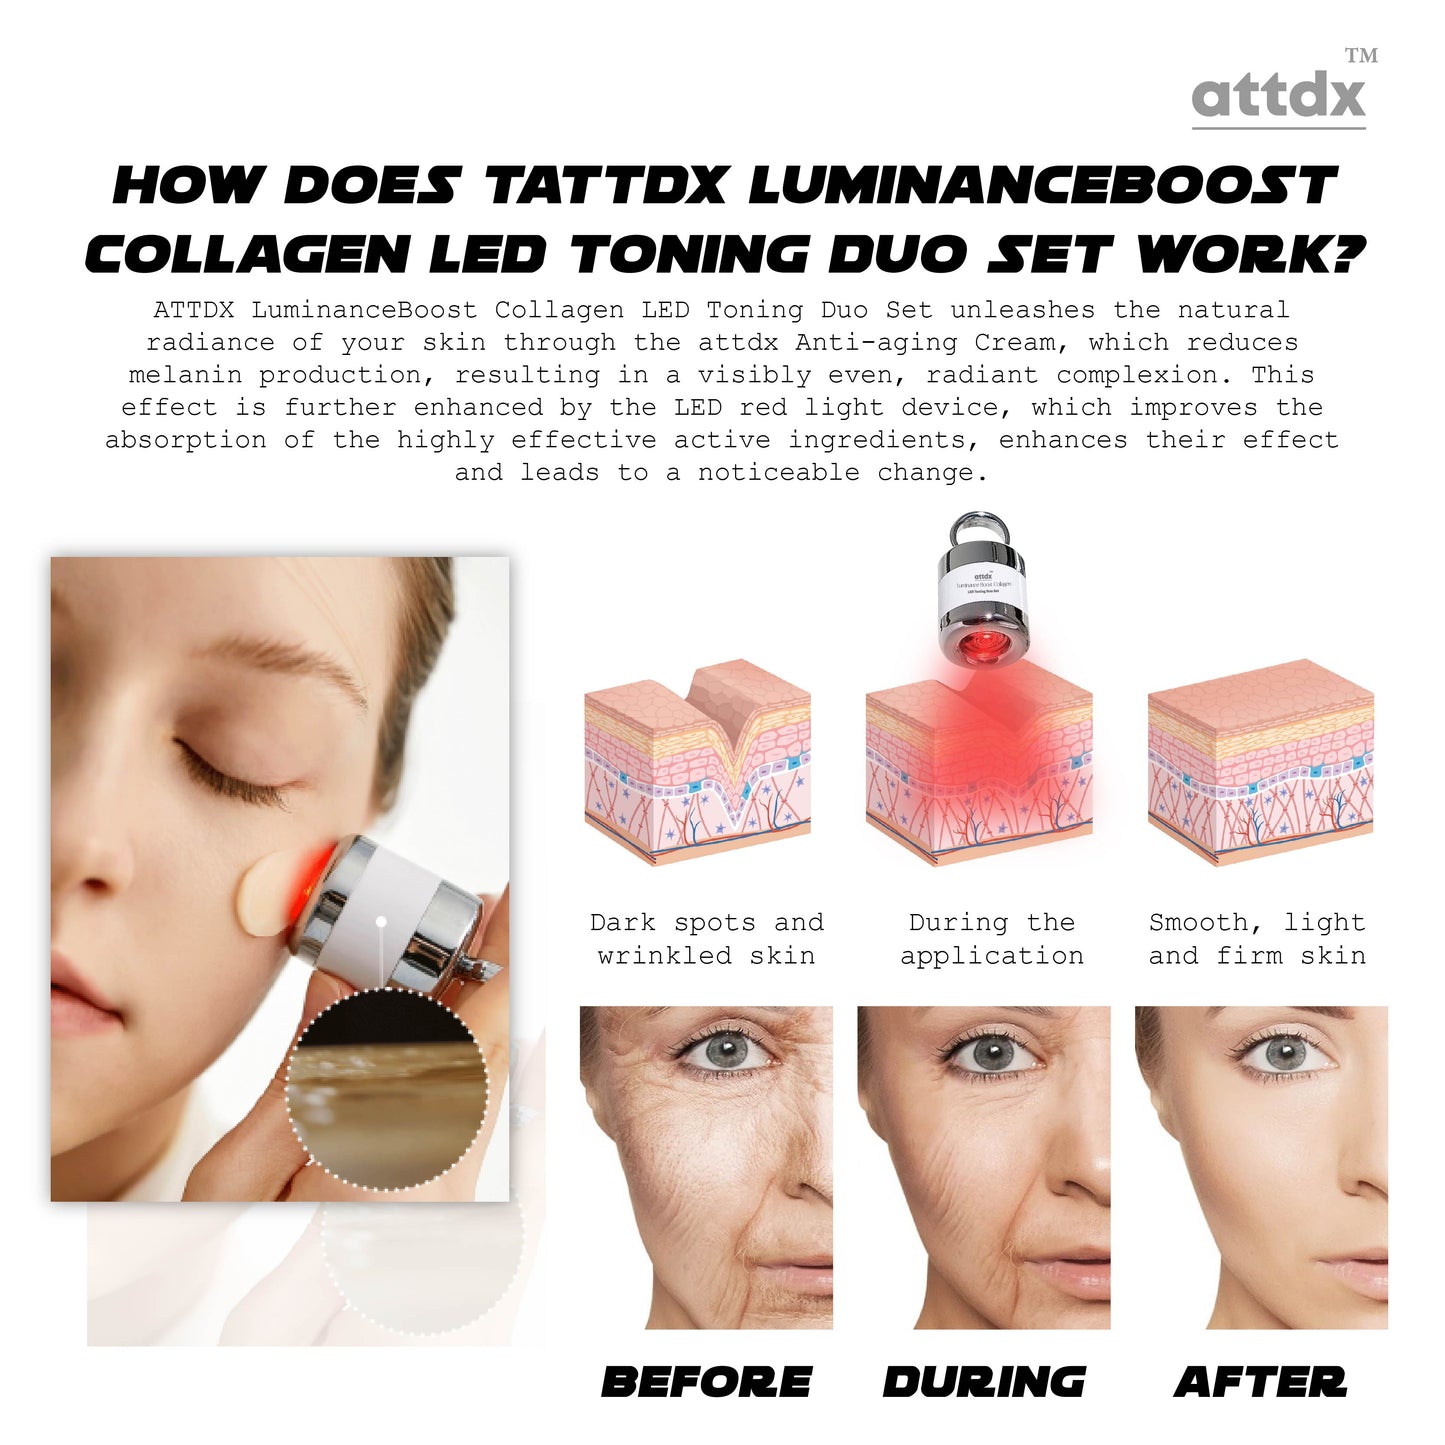 ATTDX LuminanceBoost Collagen LED Toning Duo Set